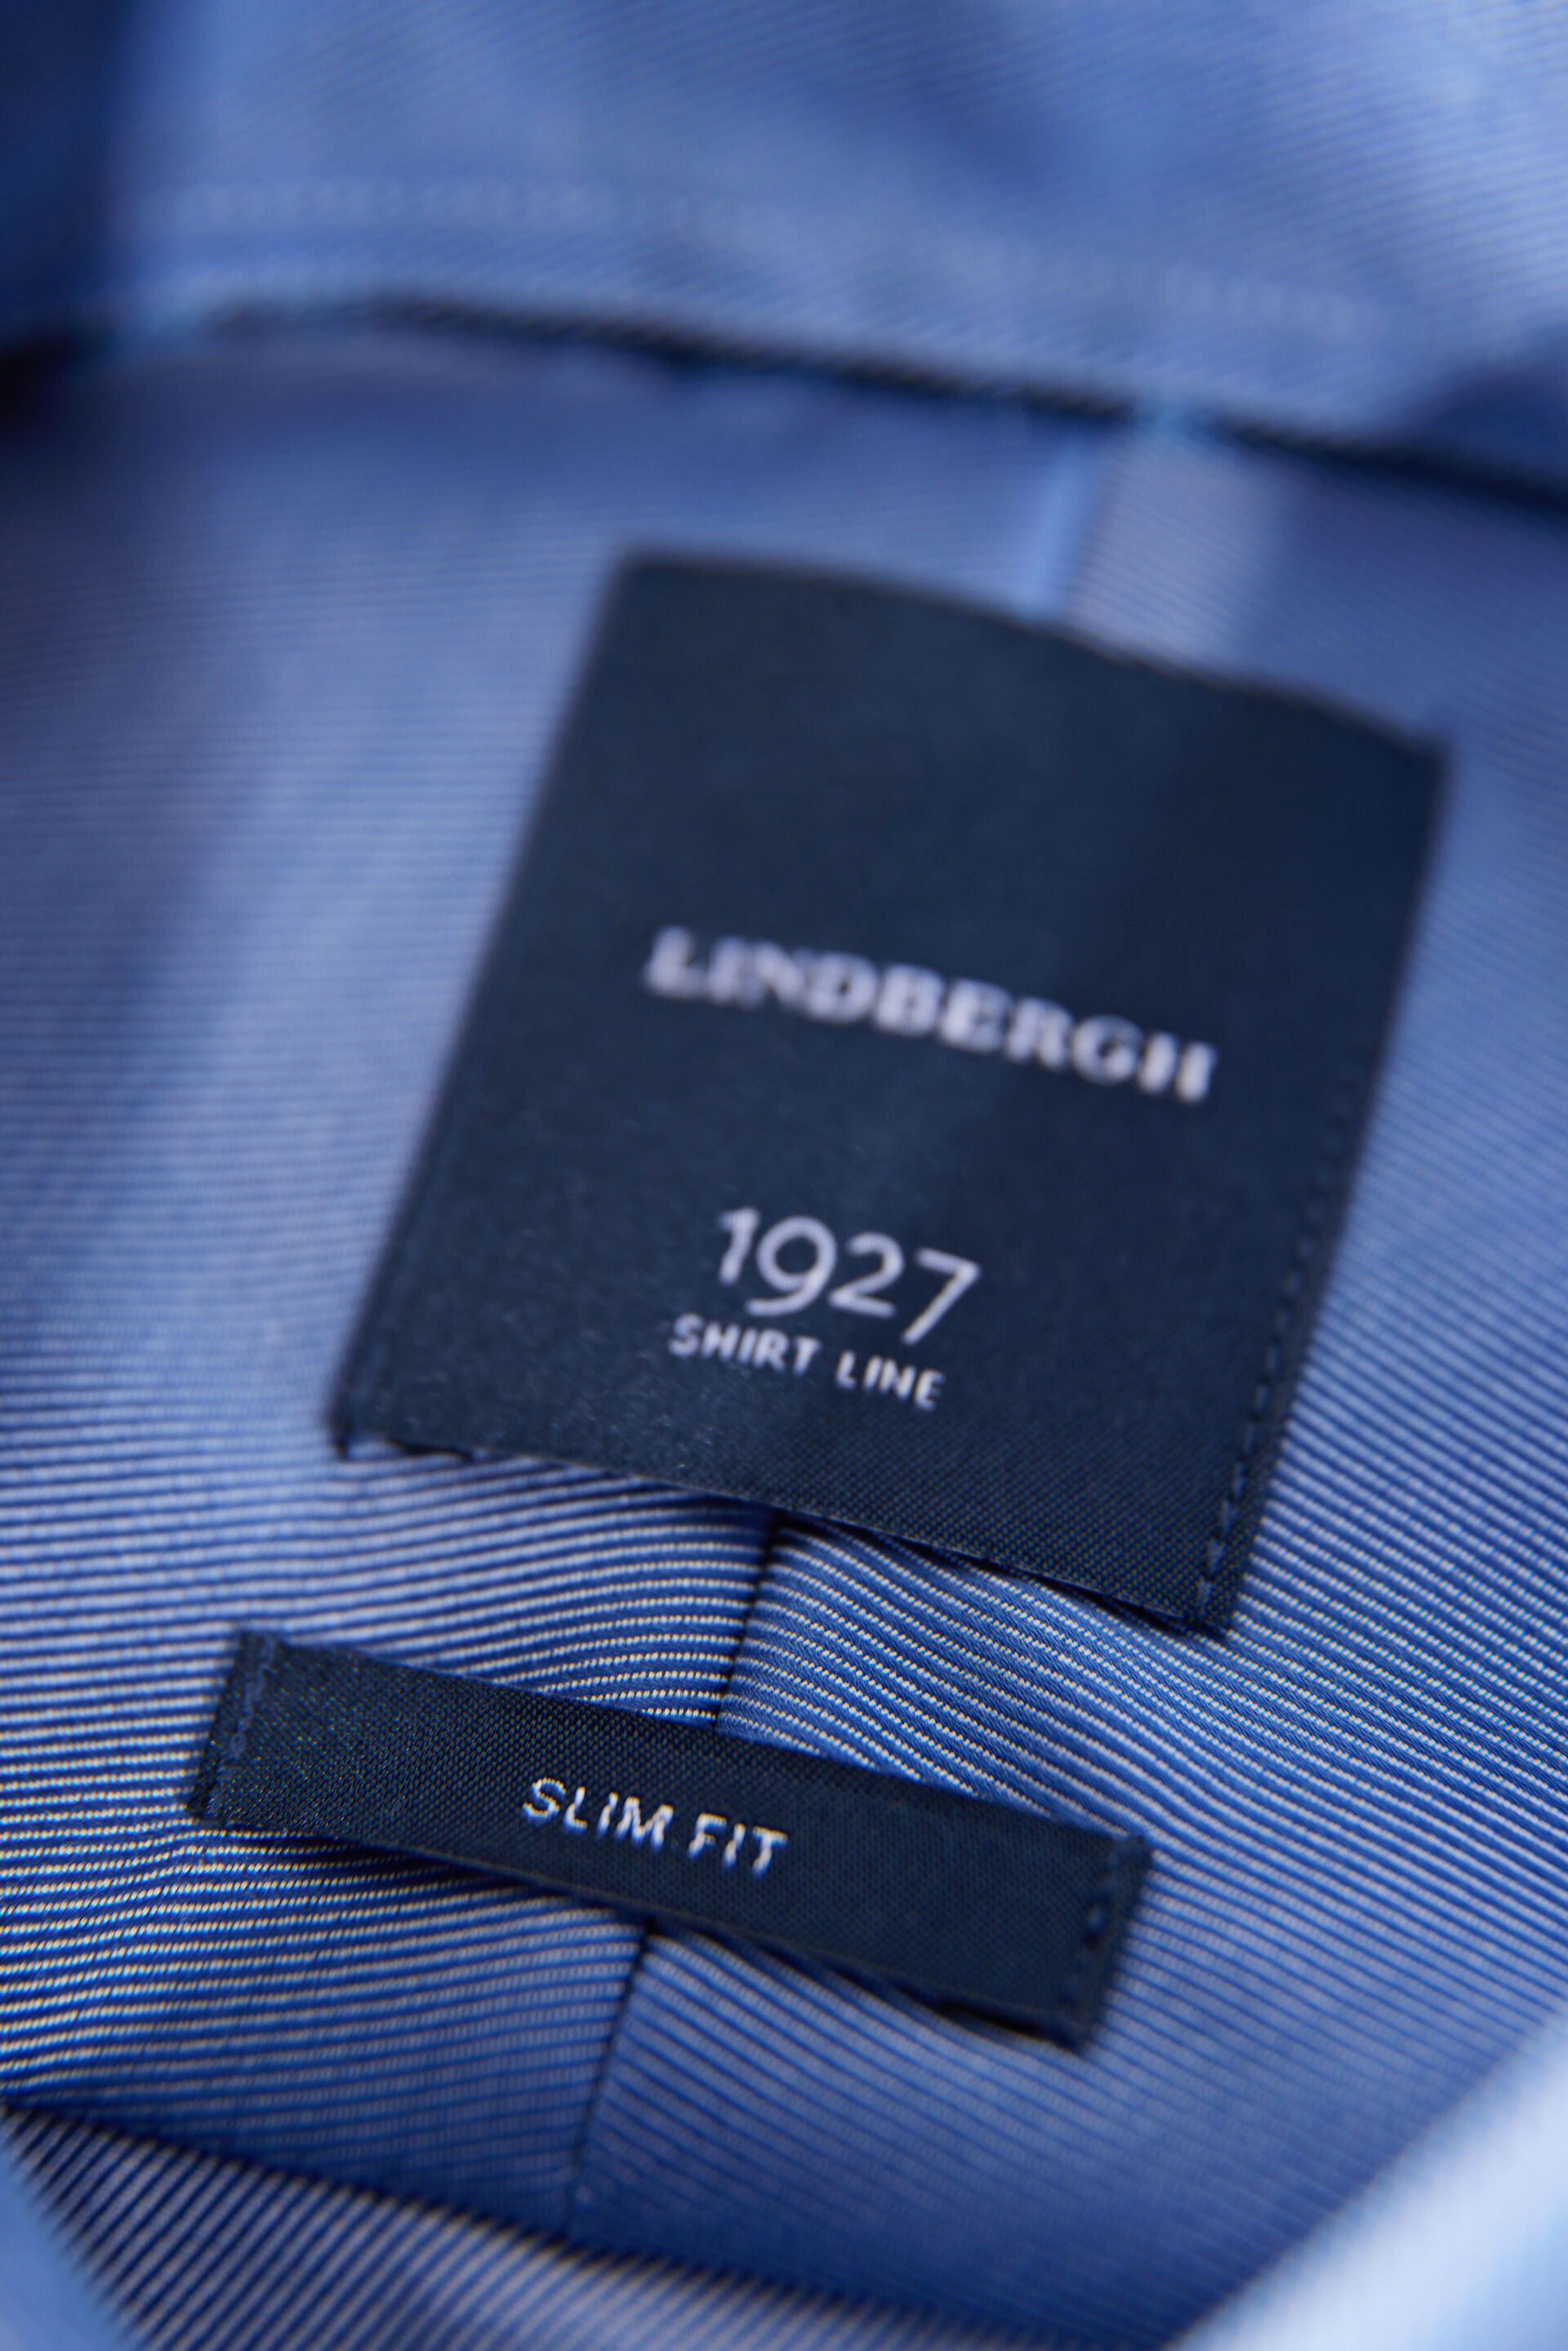 Lindbergh  1927 30-247074